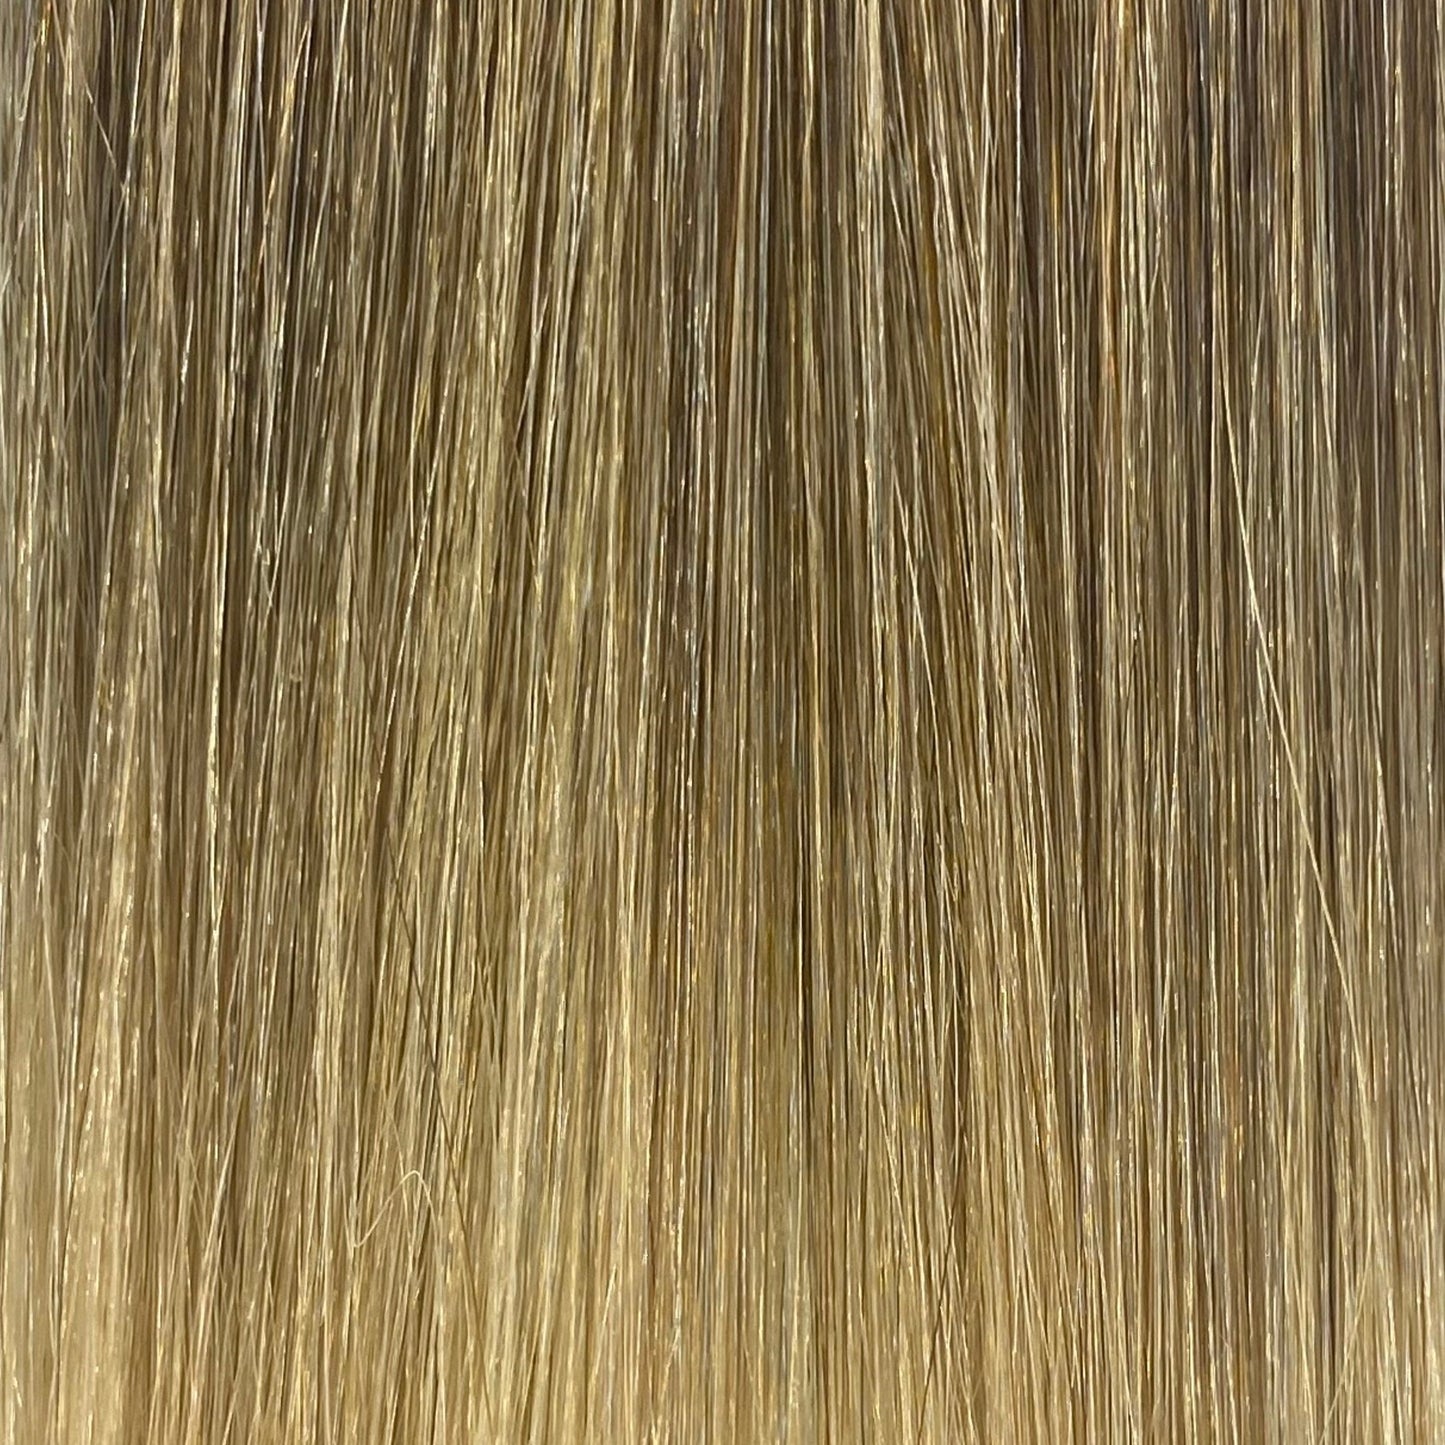 Fusion hair extensions #4 & 1001 - 50cm/20 inches - Chestnut into Platinum Blonde Ombre Fusion Euro So Cap 